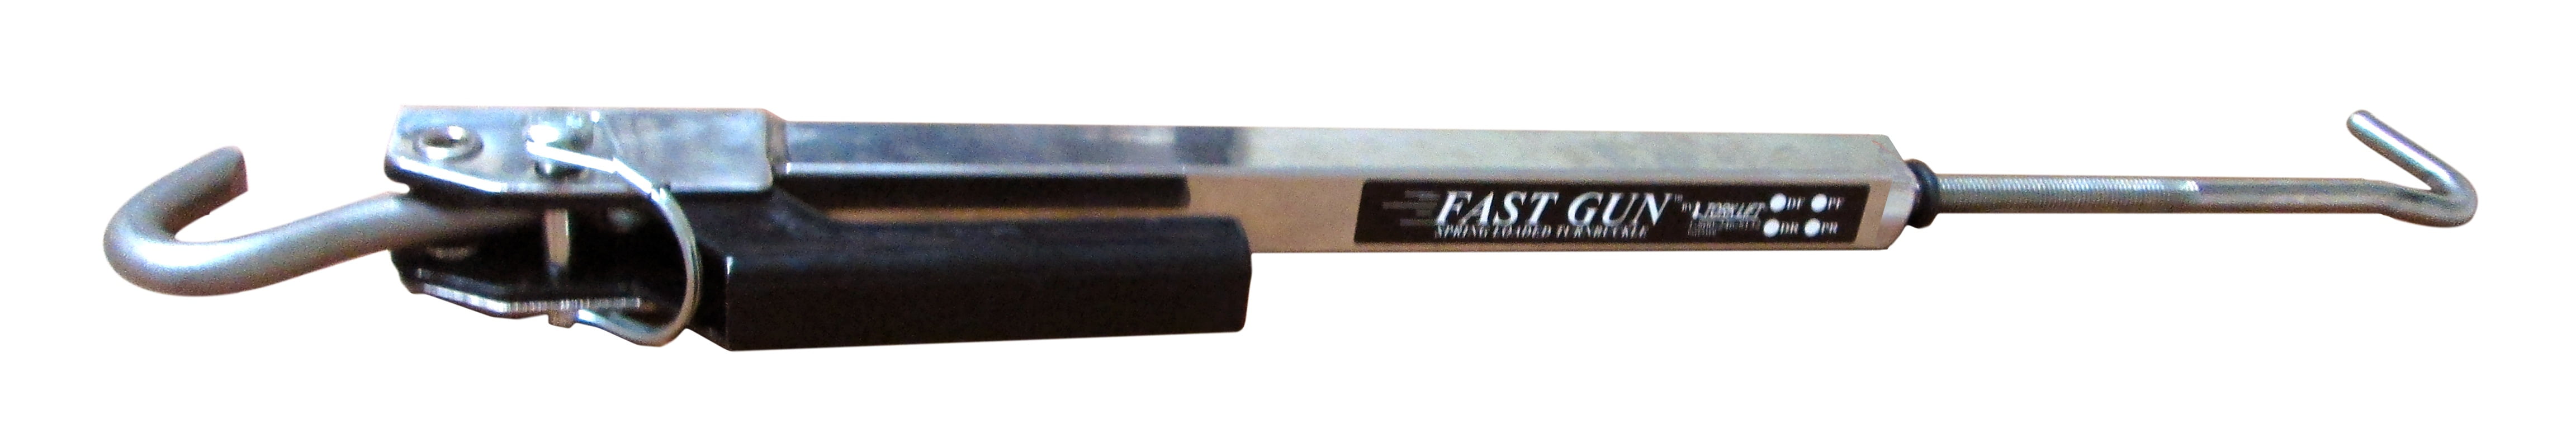 Torklift S9500 FastGun Lock Set of 4 